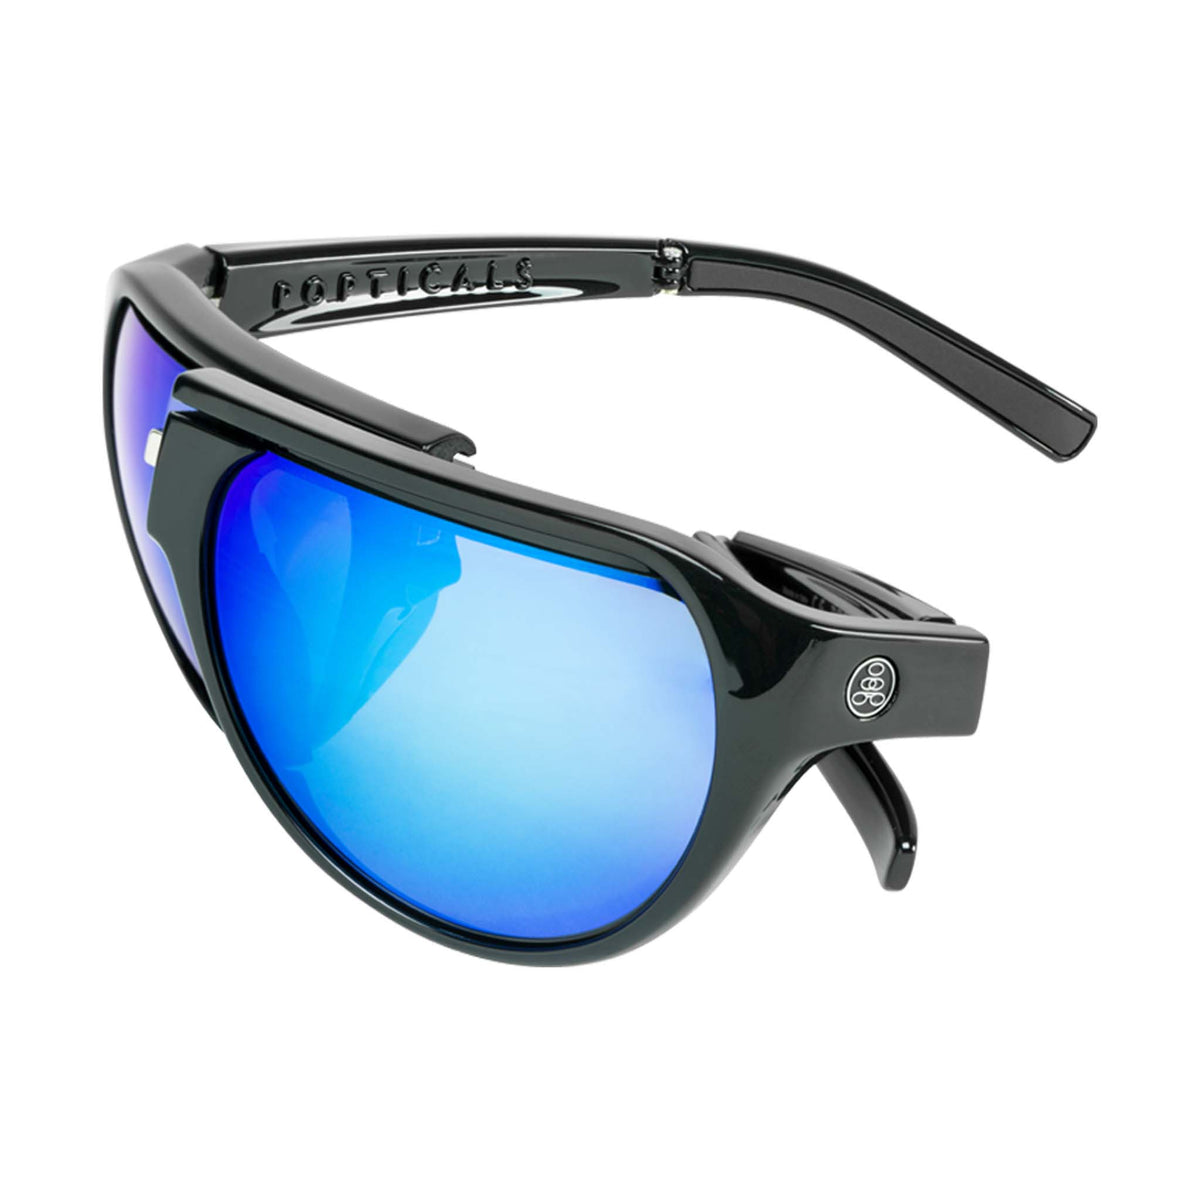 Popticals, Premium Compact Sunglasses, PopAir, 300010-BGUN, Polarized Sunglasses, Gloss Black Frame, Gray Lenses with Blue Mirror Finish, Spider View